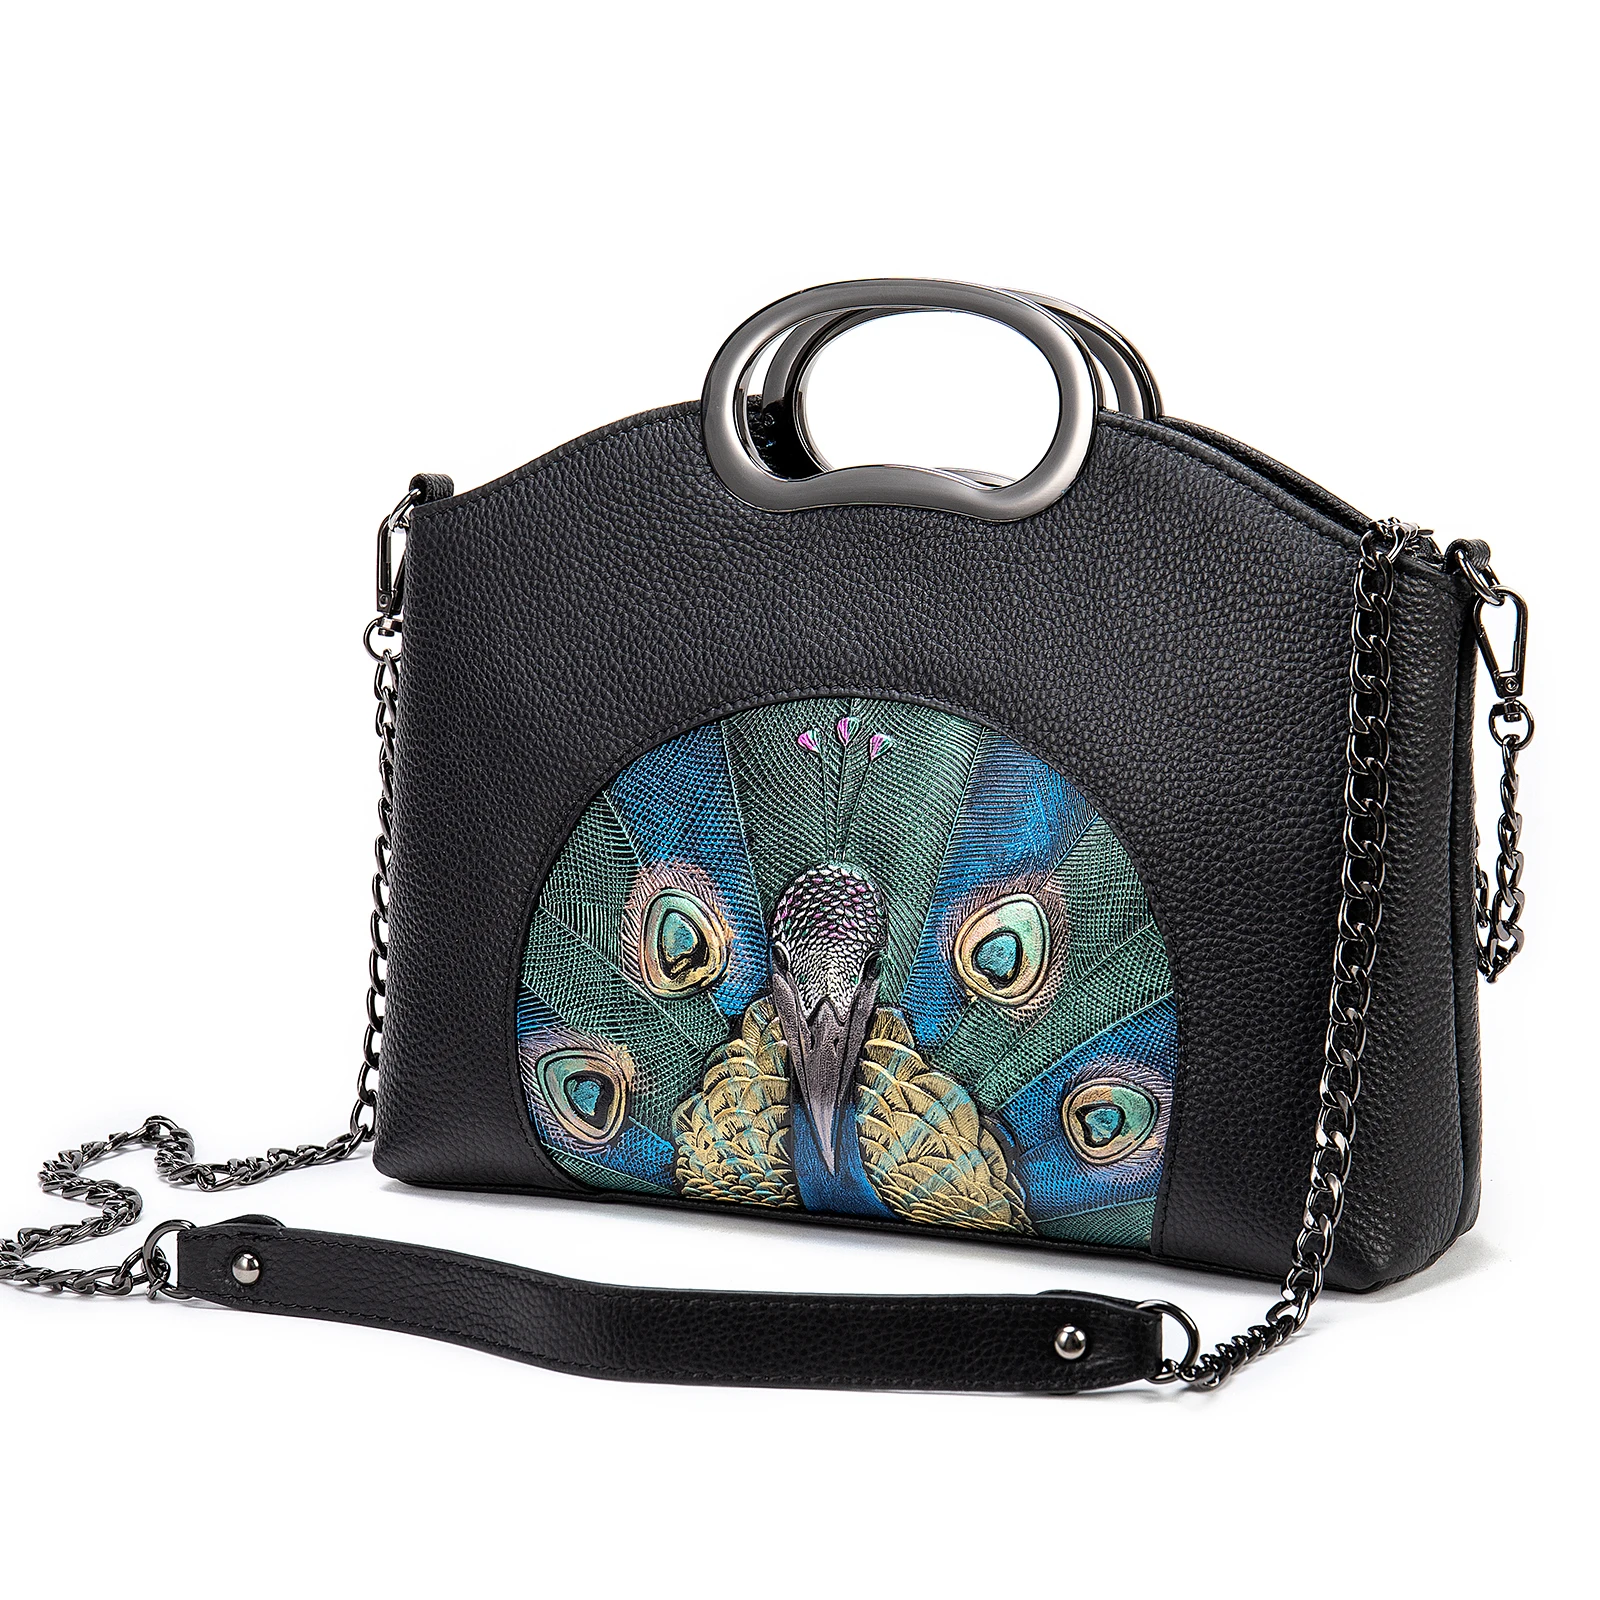 Handbags for Women Peacock Flower Tote Shoulder Bag Satchel for Ladies Girls 